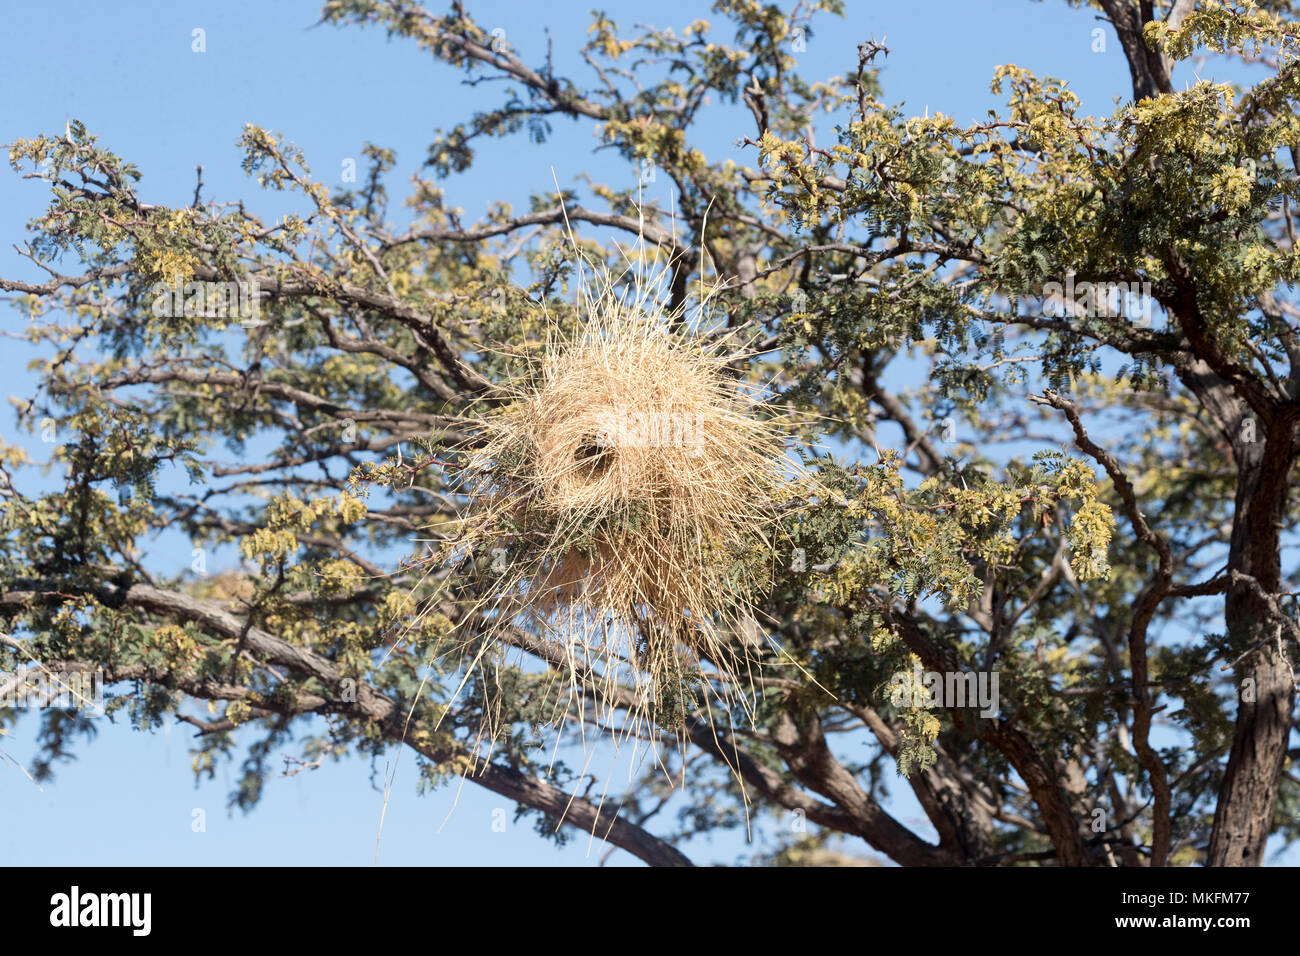 savannah with acacia trees and nest of hite-browed sparrow-weaver (Plocepasser mahali), Kalahari Desert, South African Republic Stock Photo